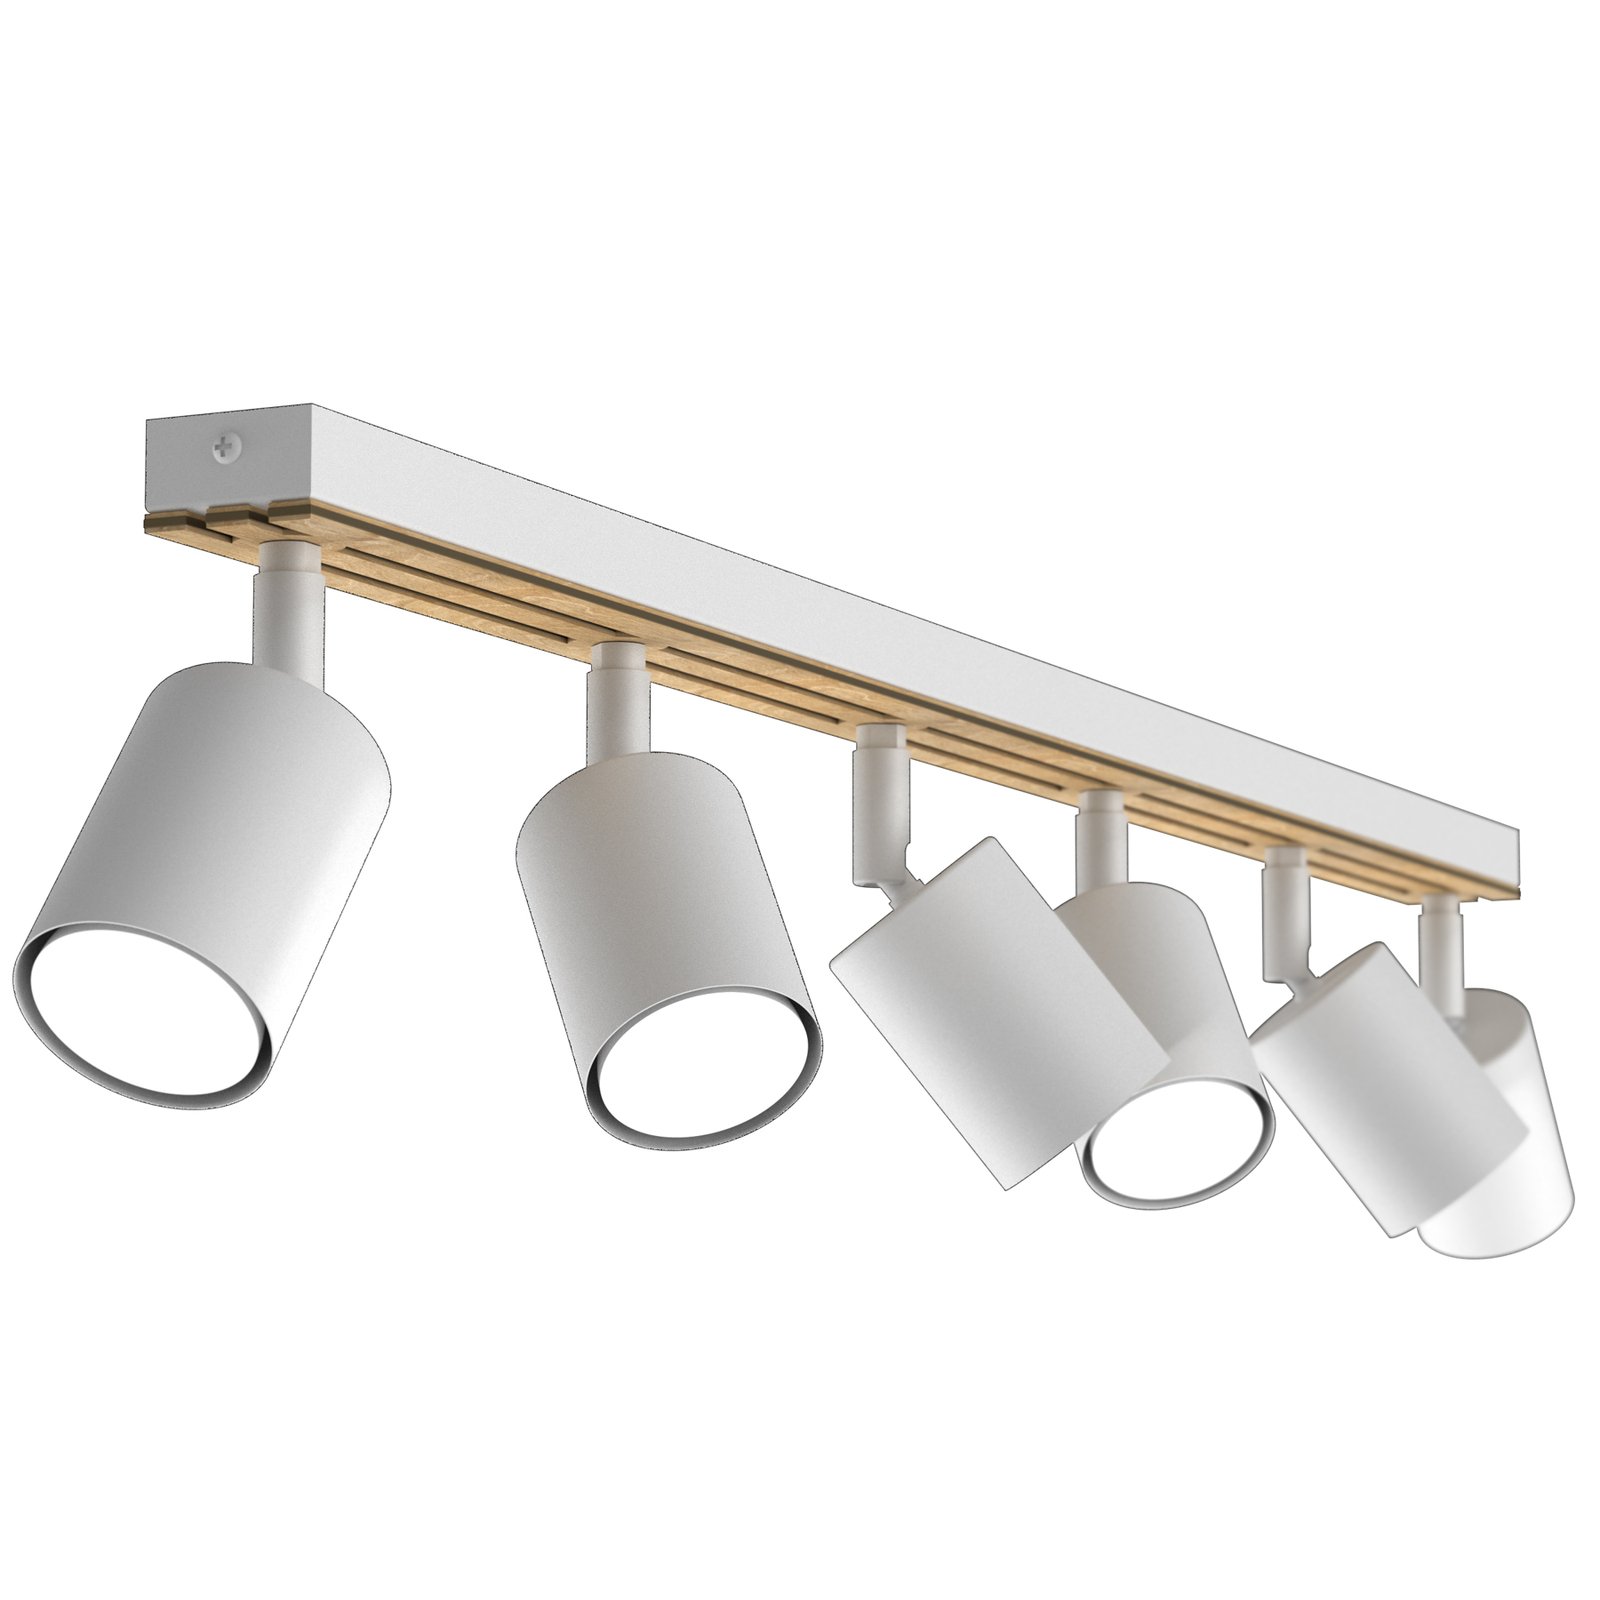 Envostar Tino spot plafond à 6 lampes blanc/bois